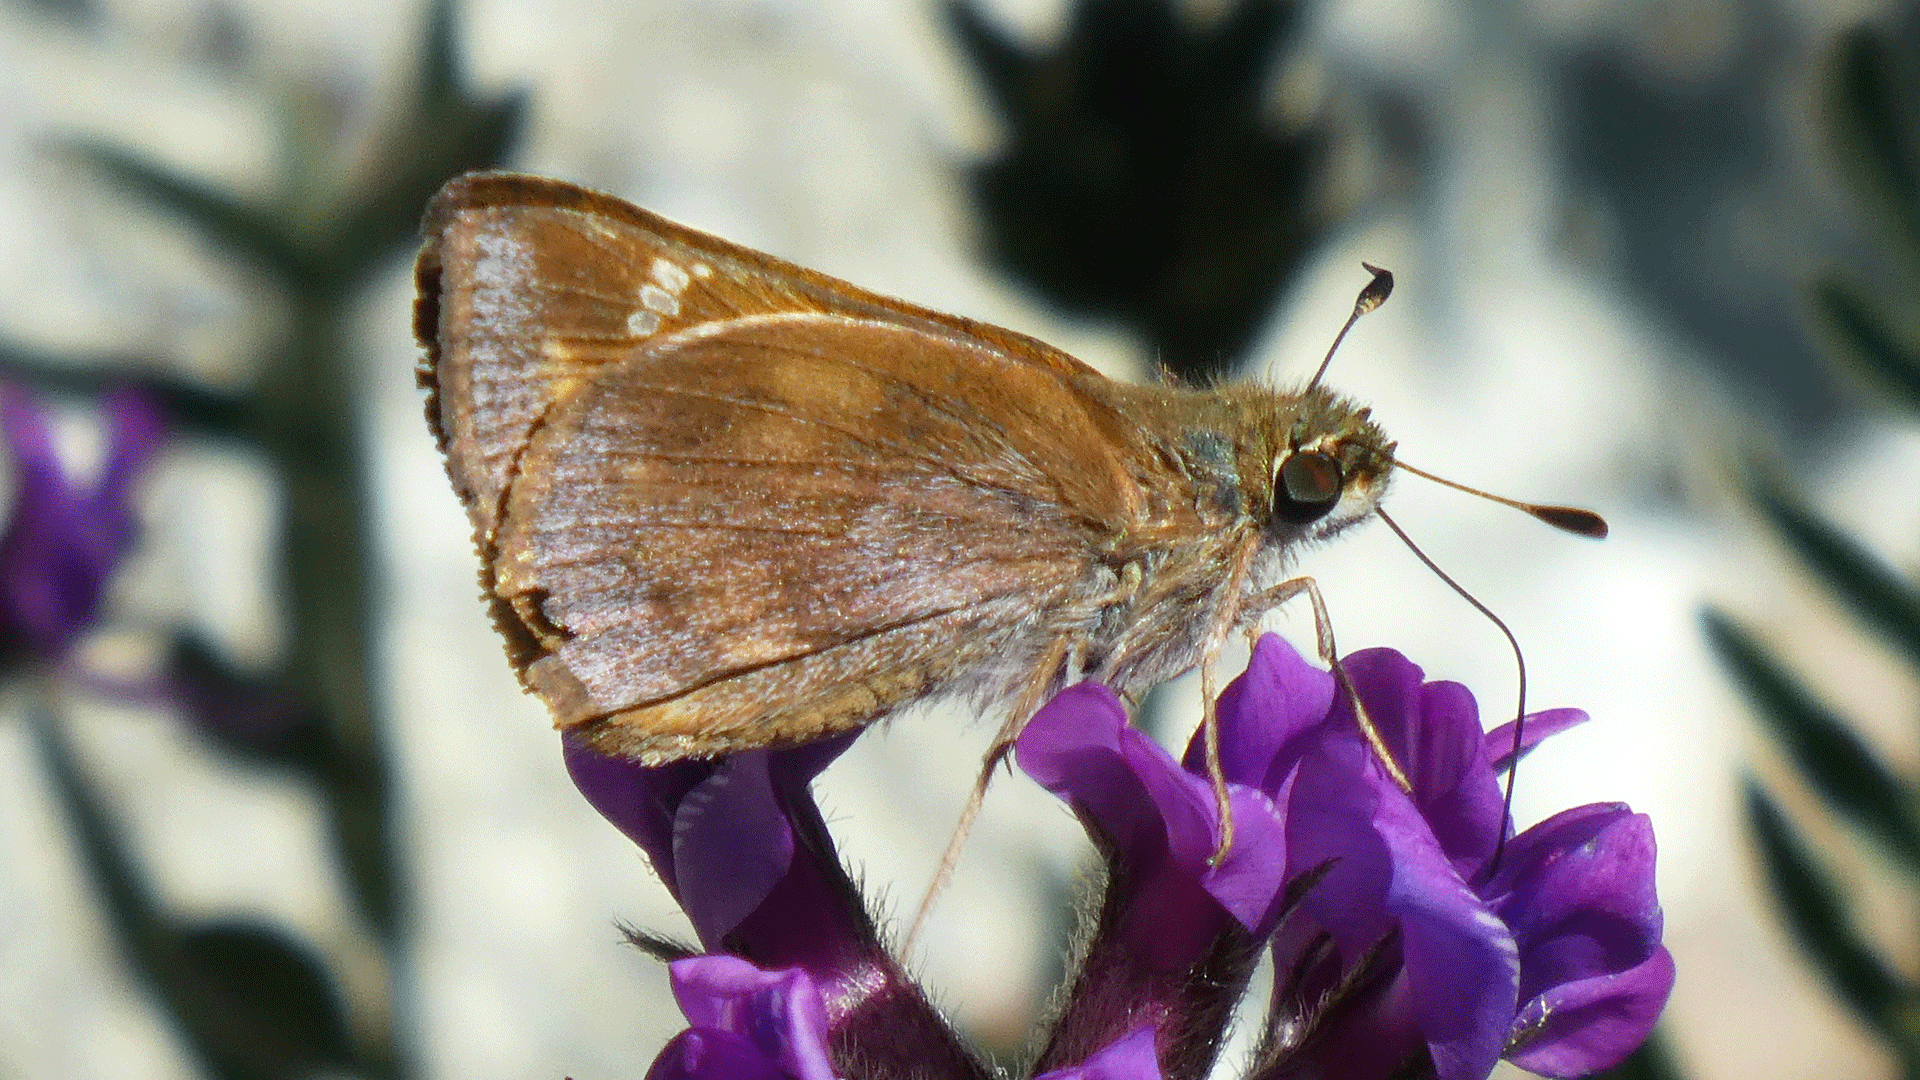 Female, upper Sandia Mountains, July 2020